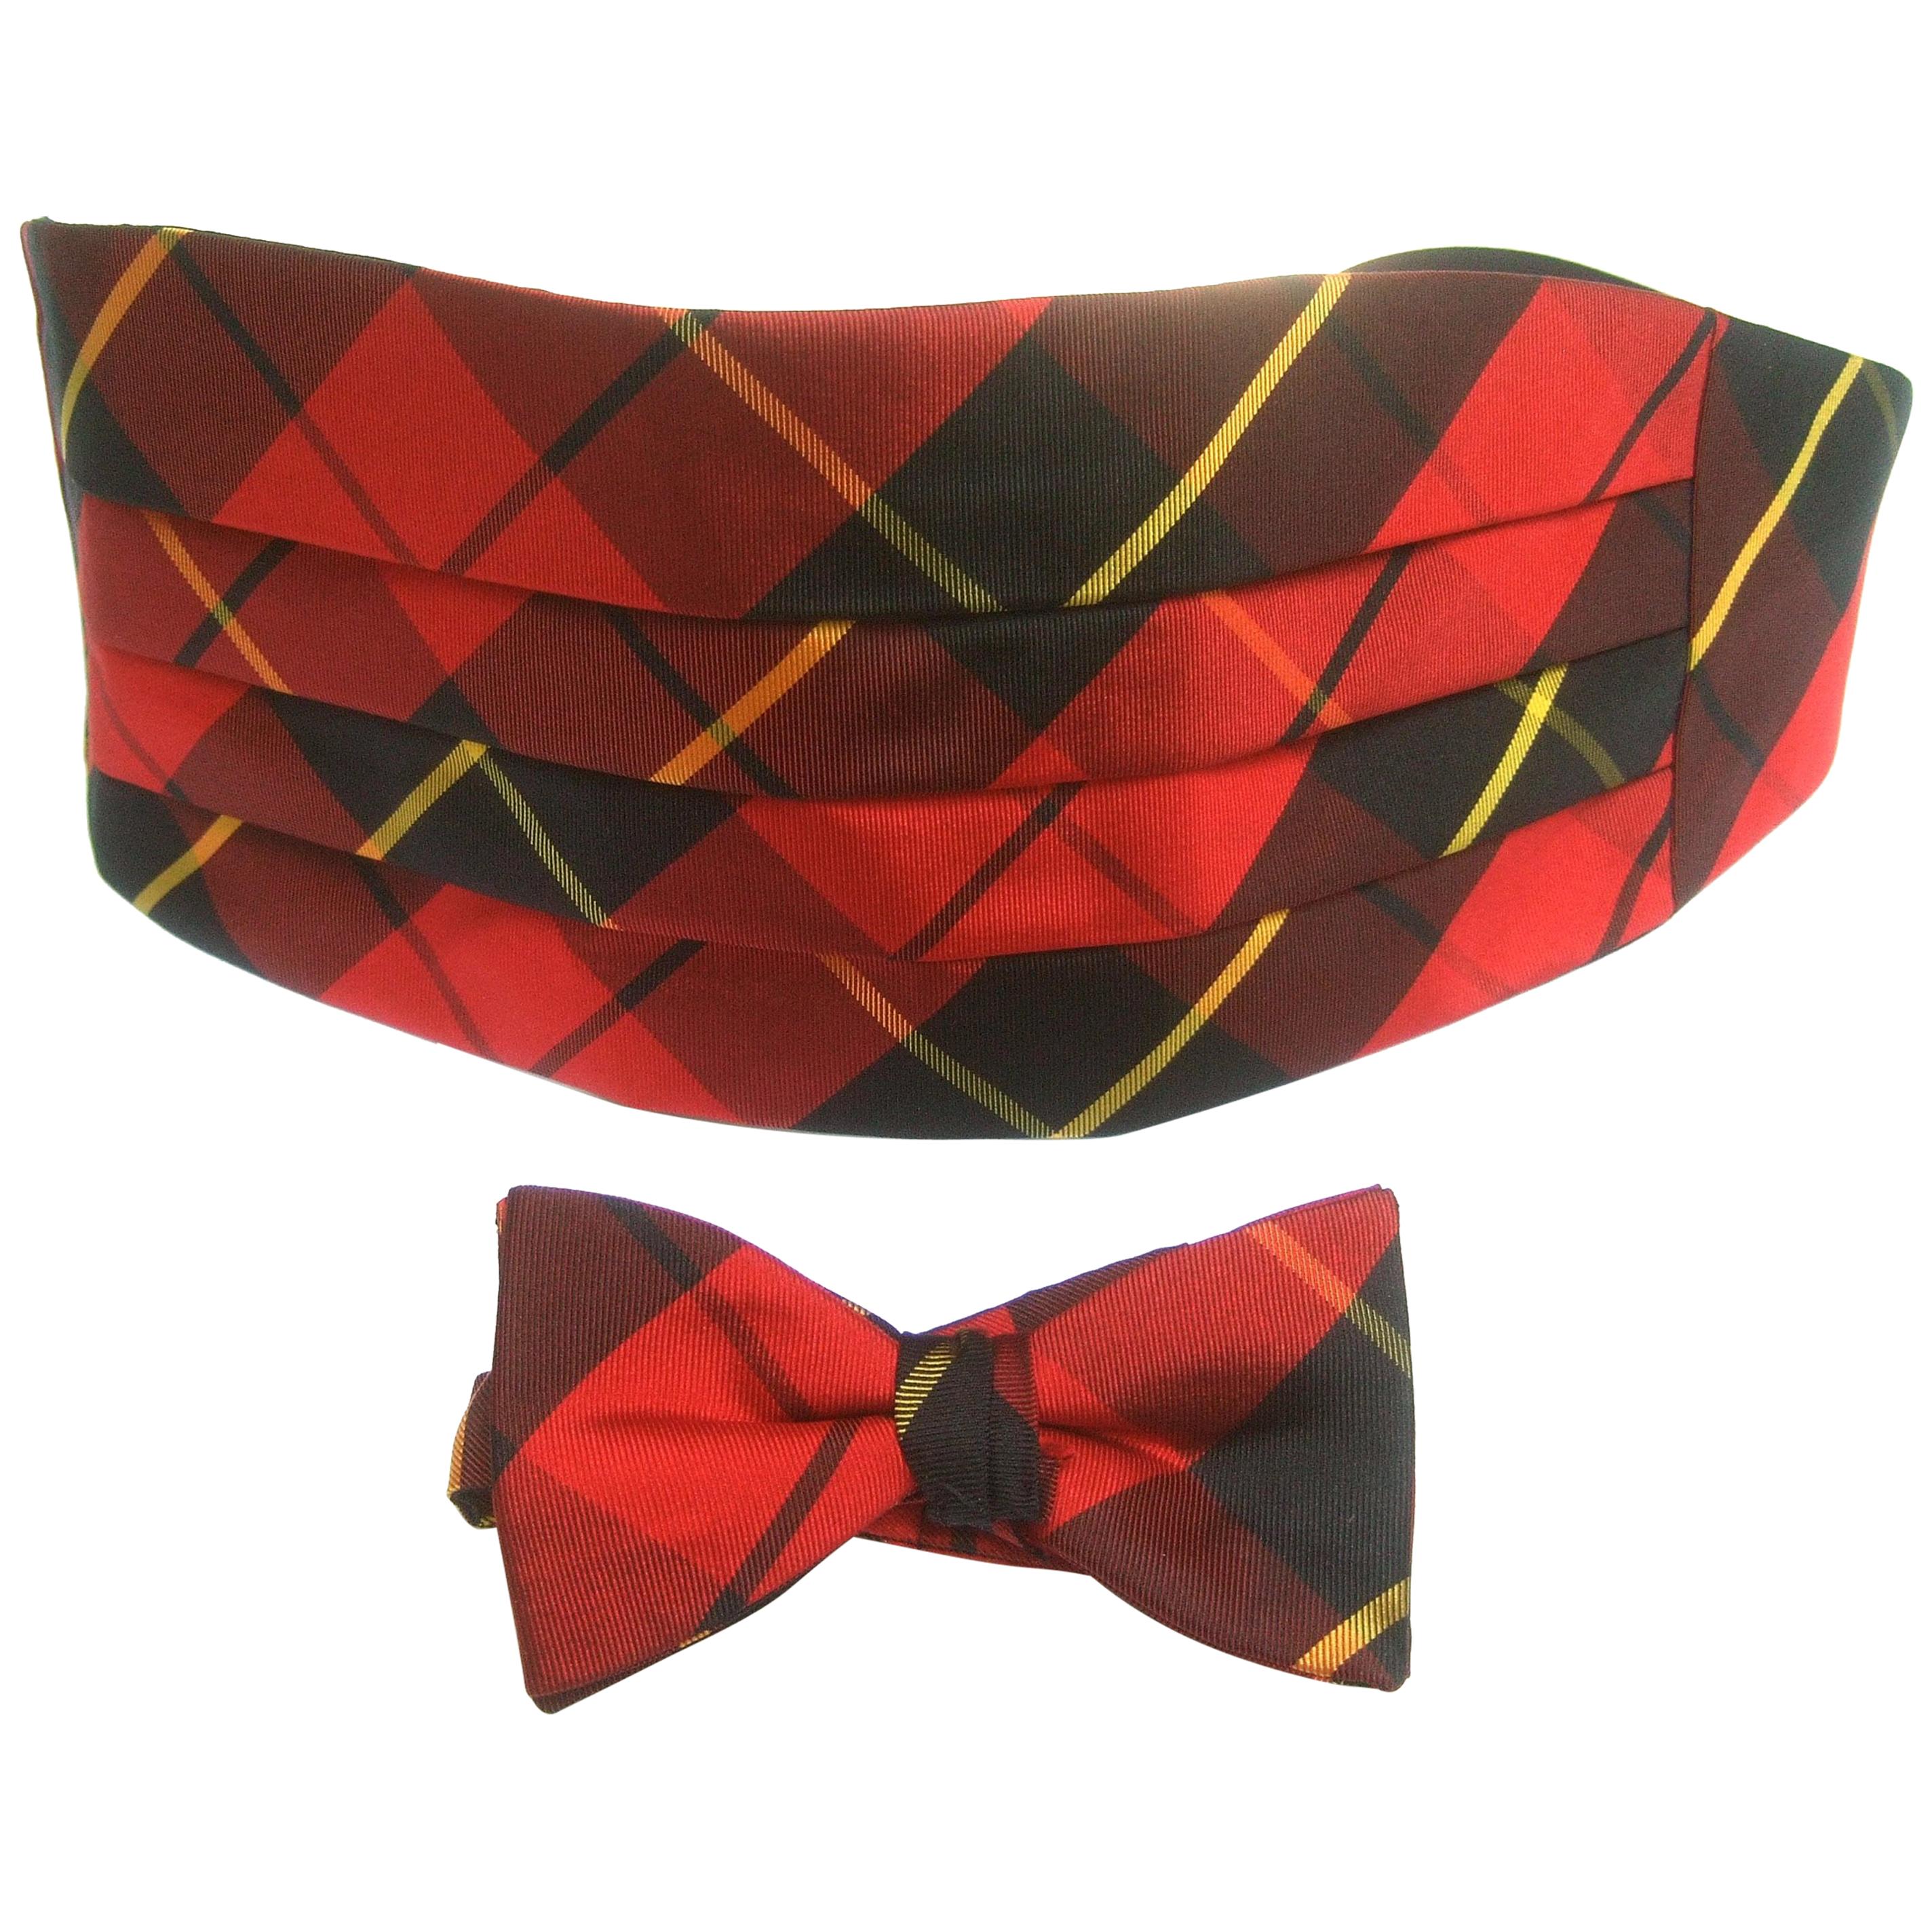 Burberry's Men's Red & Black Tartan Plaid Silk Cummerbund Bow Tie Set c 1980s 